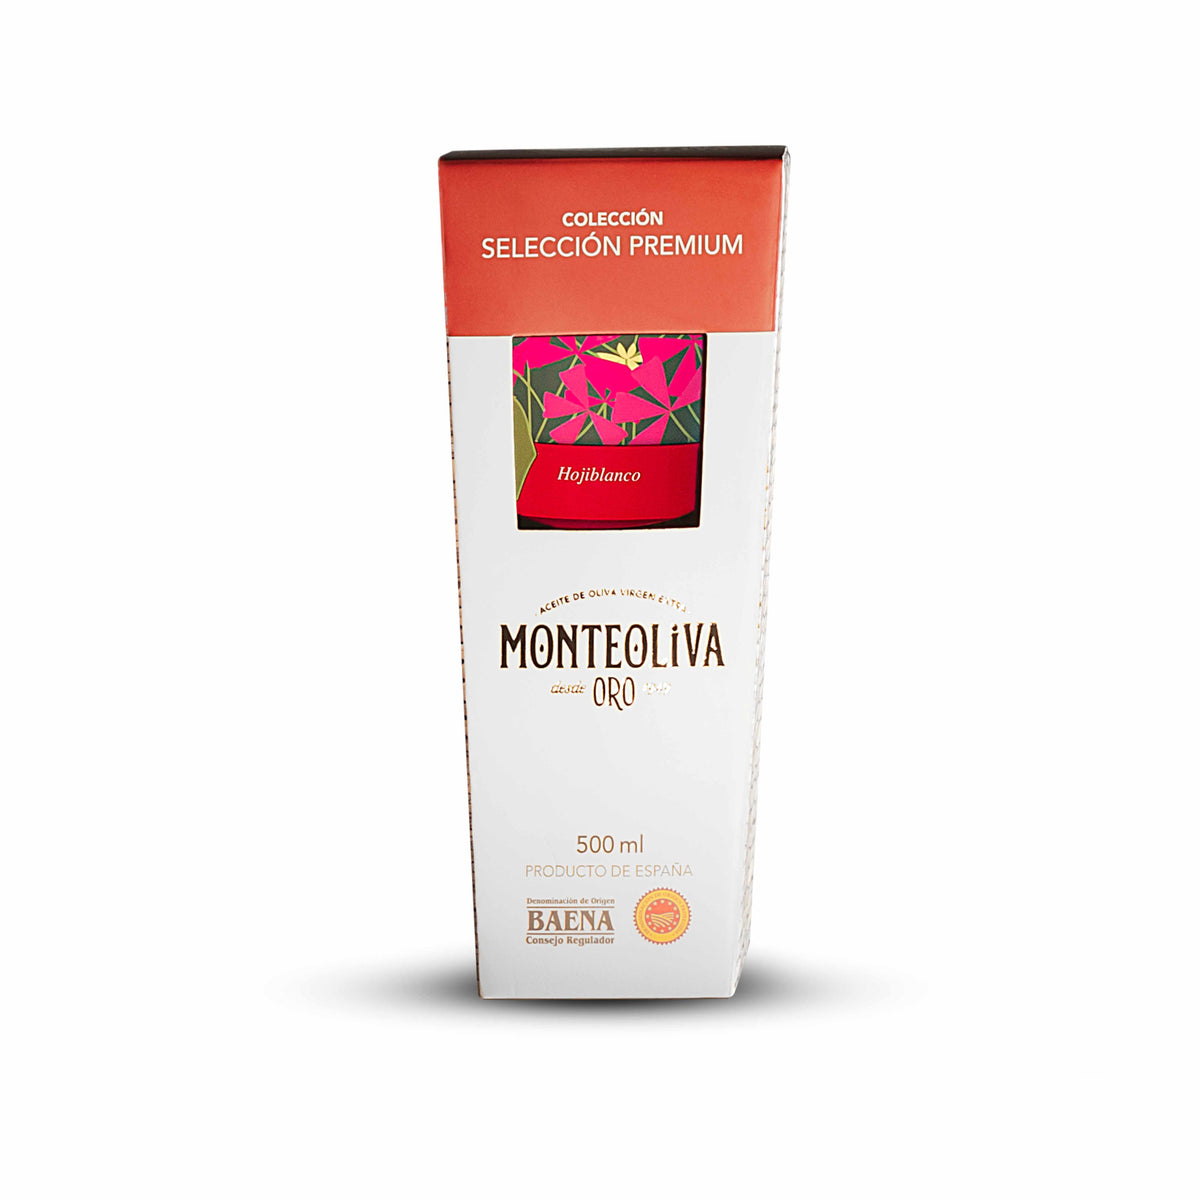 MONTEOLIVA - Hojiblanca